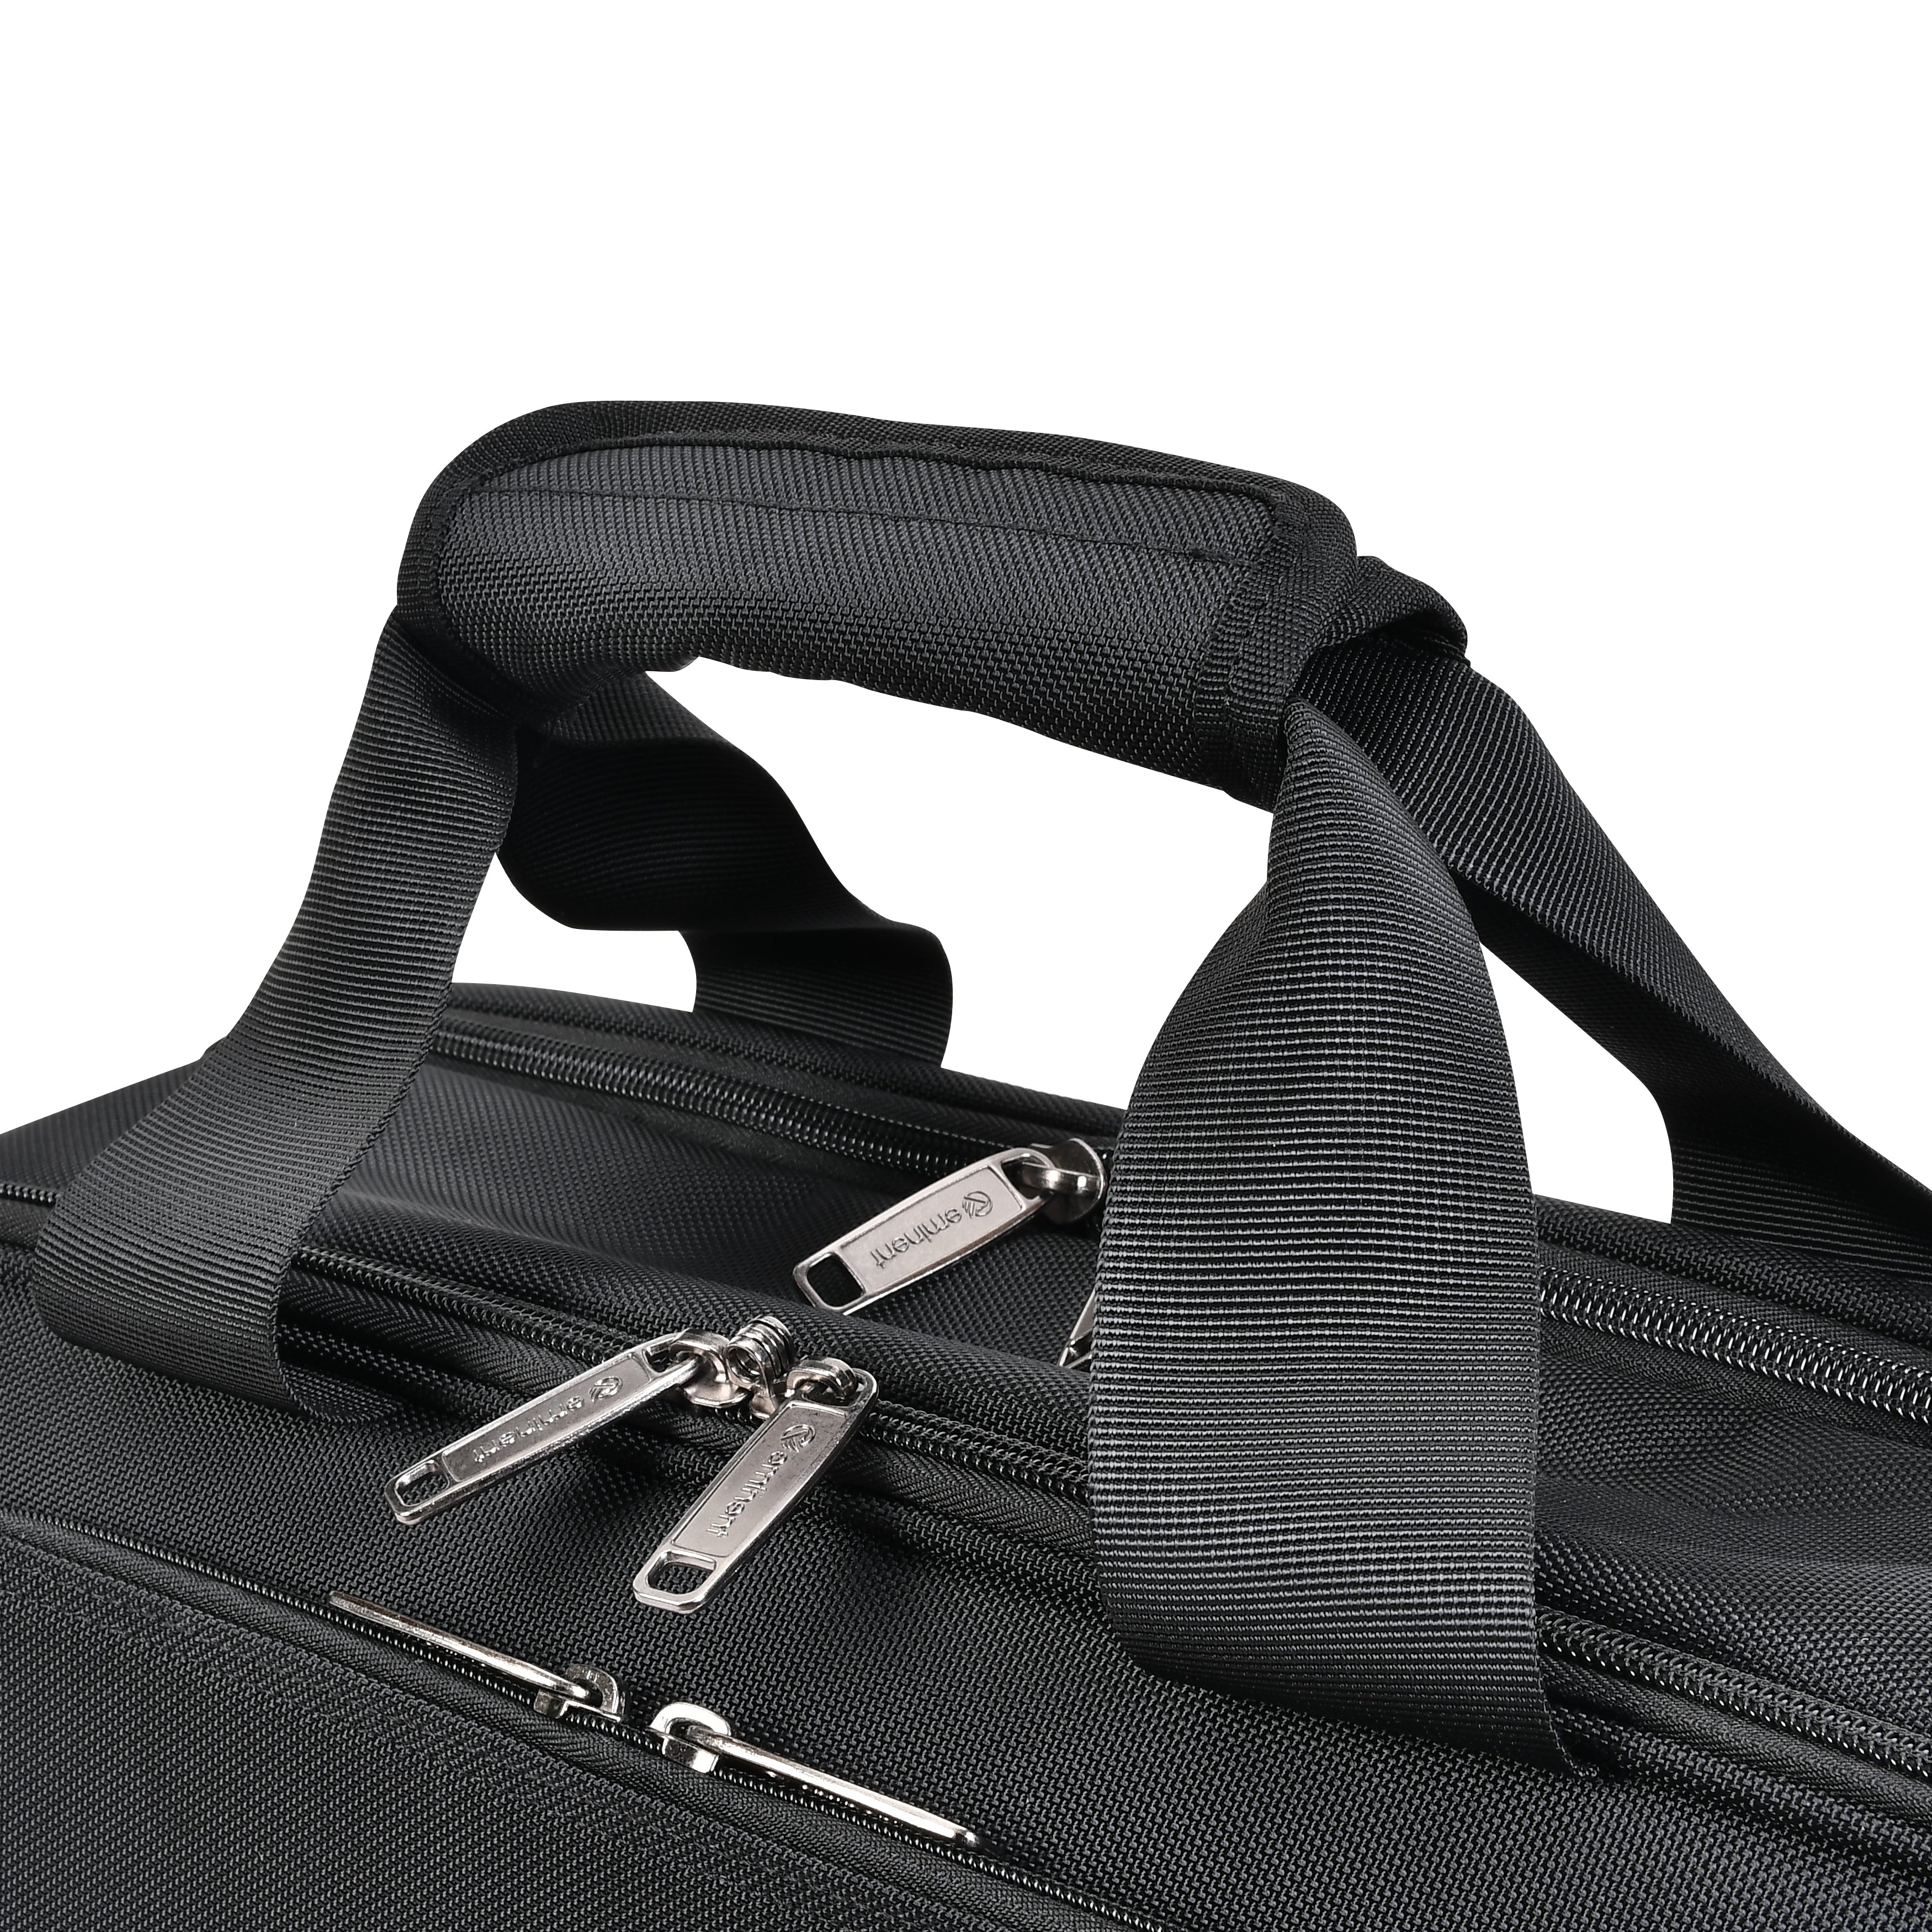 Eminent Premium Polyester Laptop Bag 17 Inch Light Weight 180° Opening Business Laptop Case for Men Women on Travel Business, V612-17